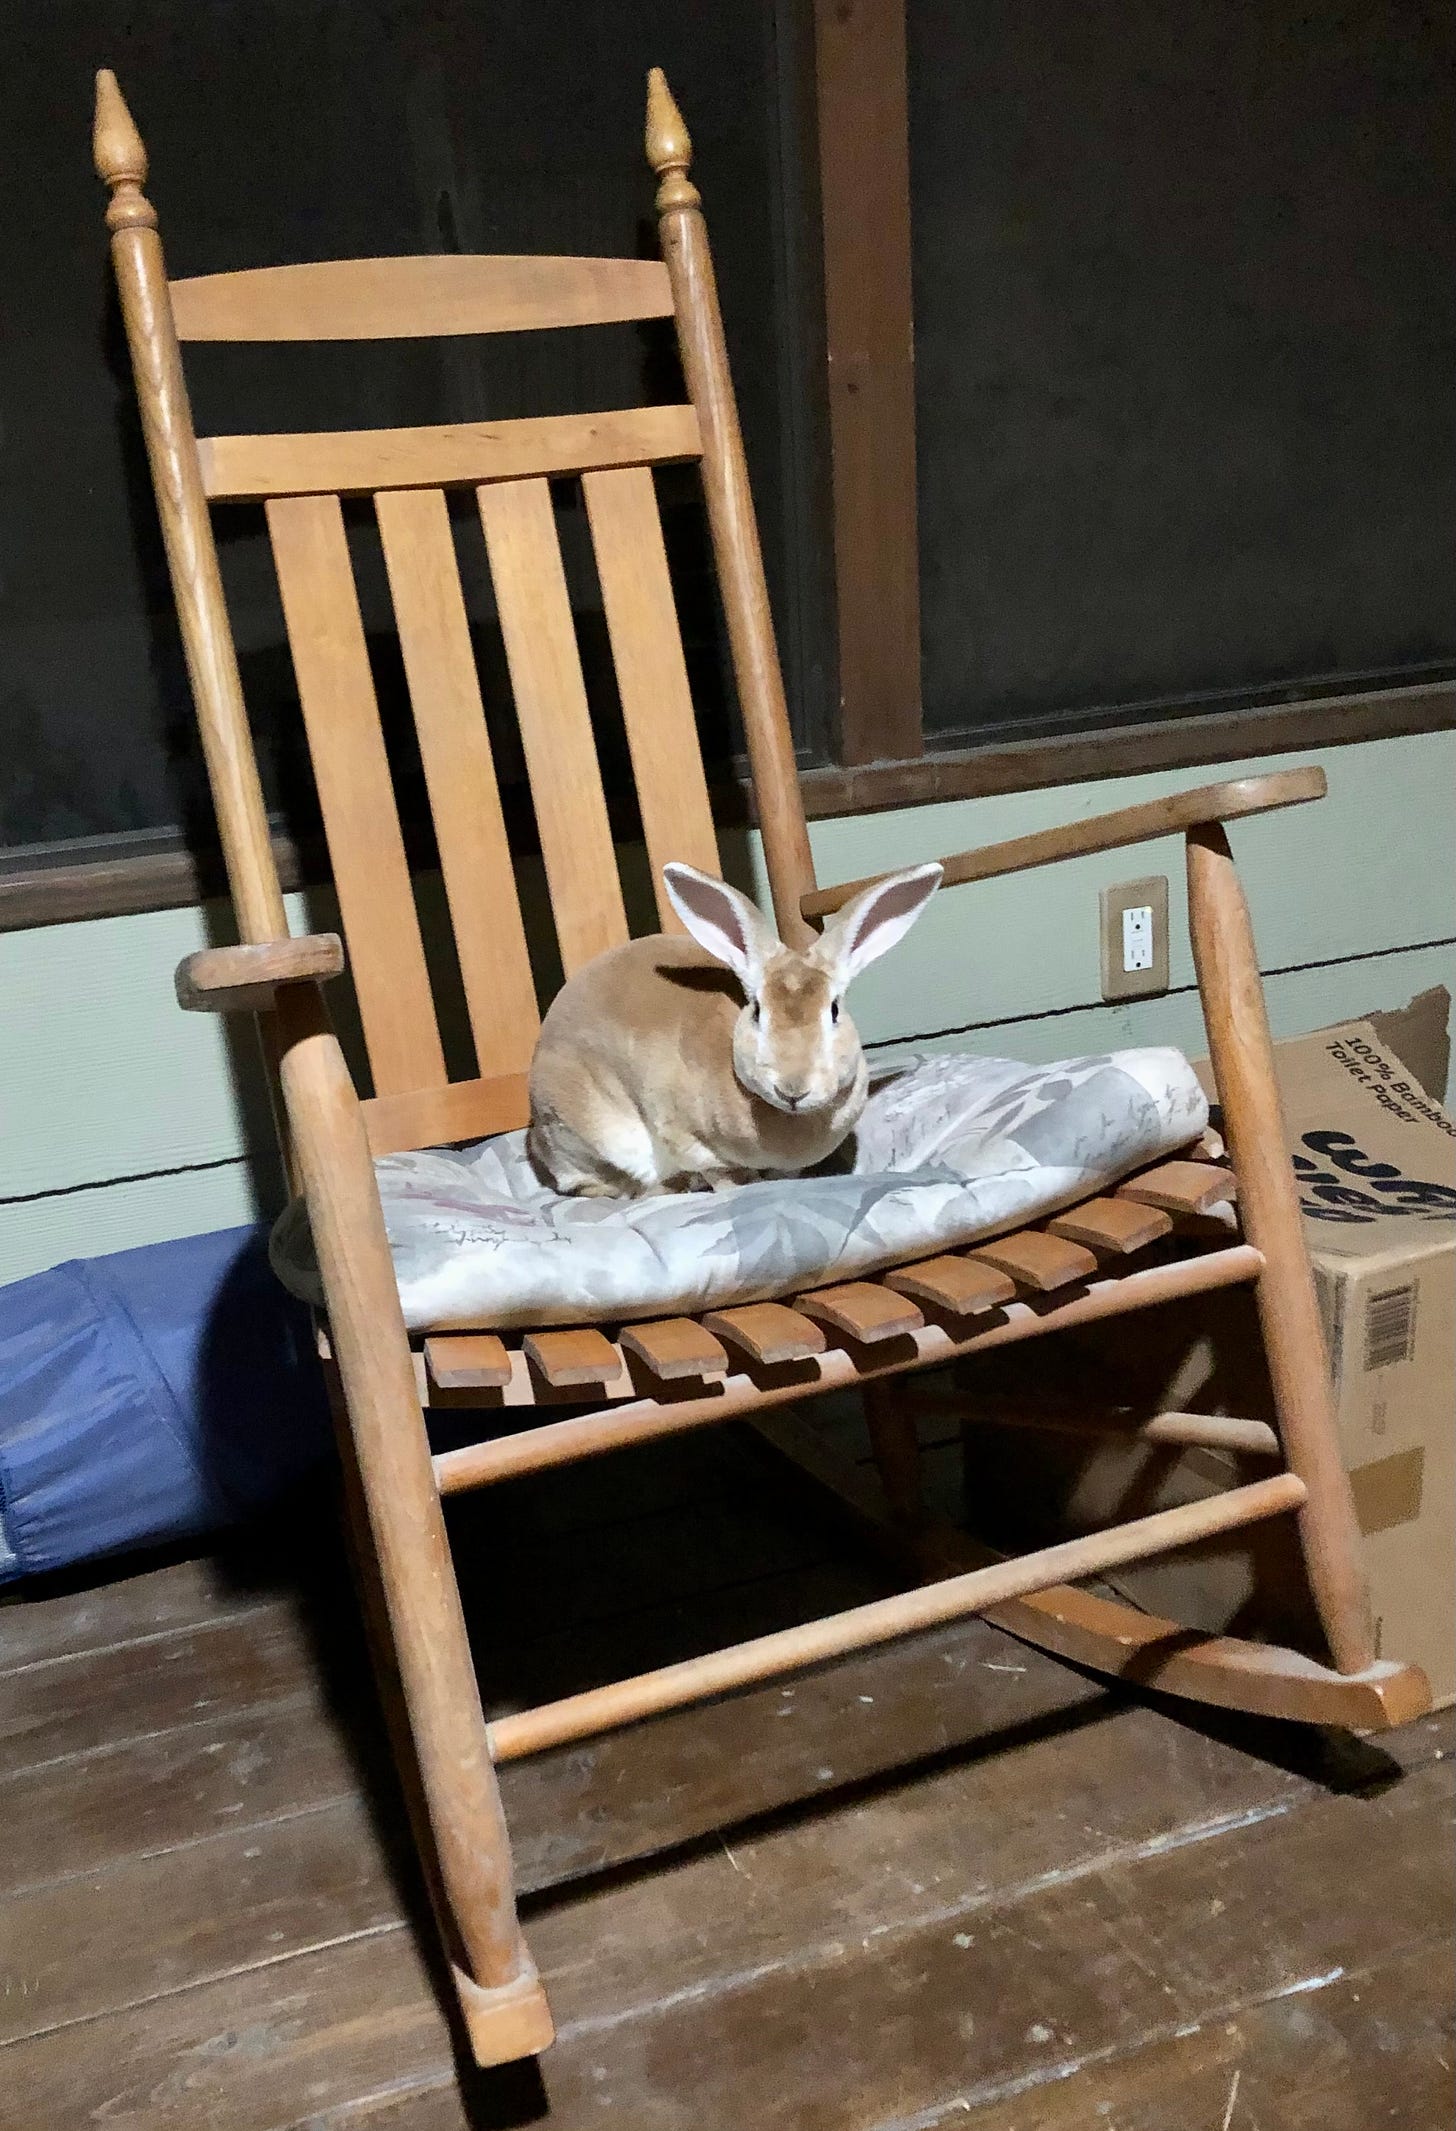 Rabbit sitting on rocking chair